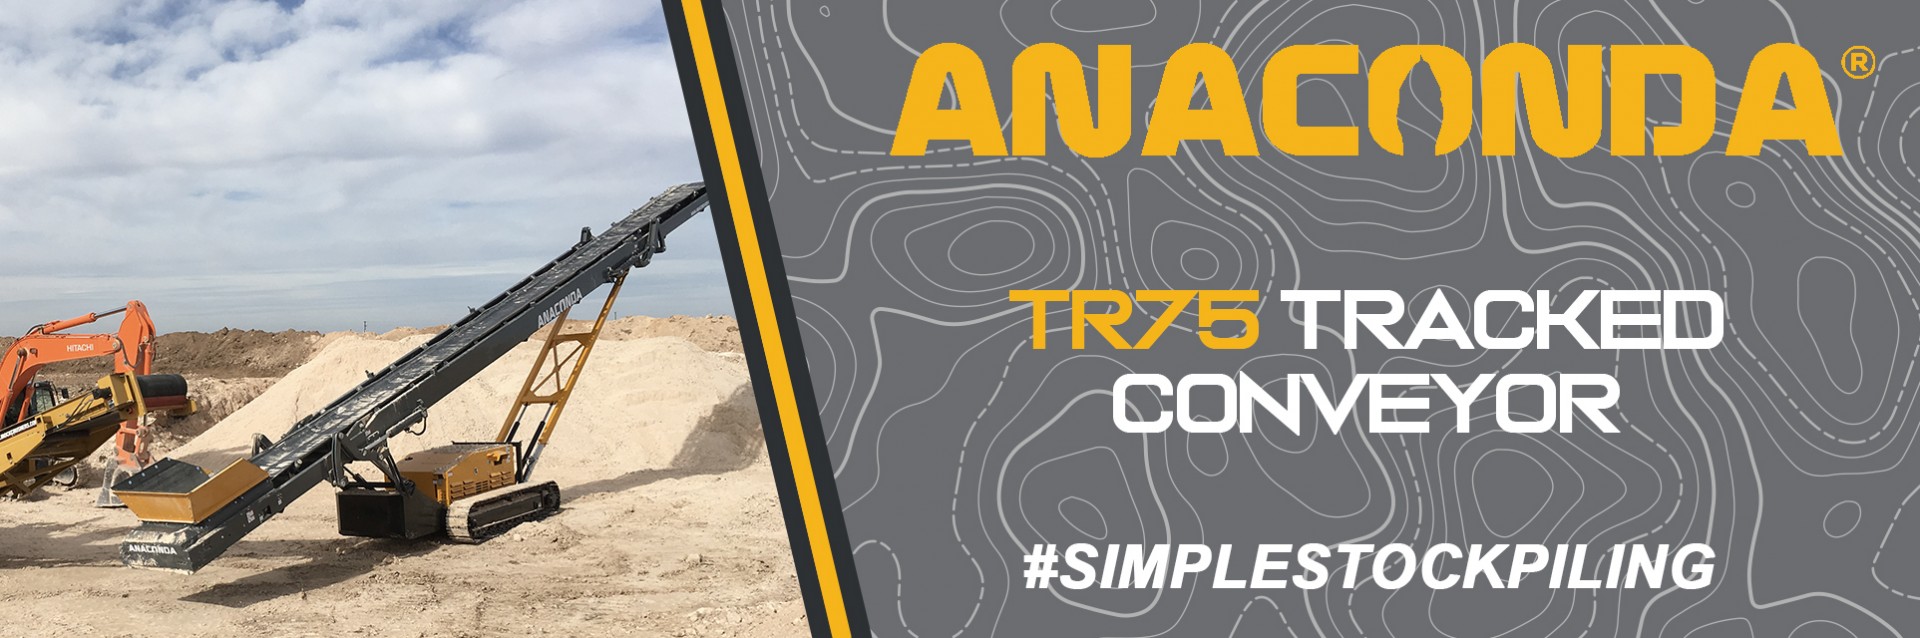 Anaconda TR75 Tracked Conveyor